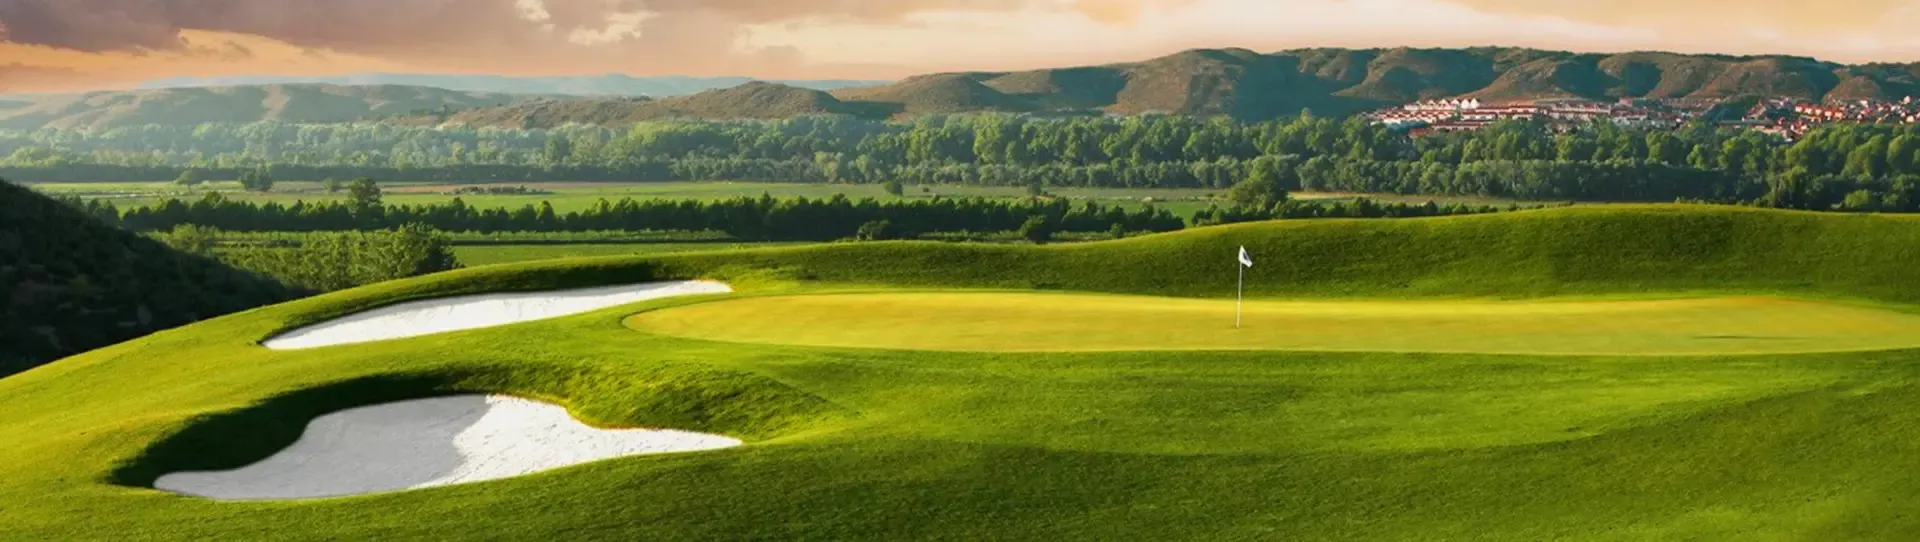 Spain golf courses - Club de Golf Aranjuez - Photo 1